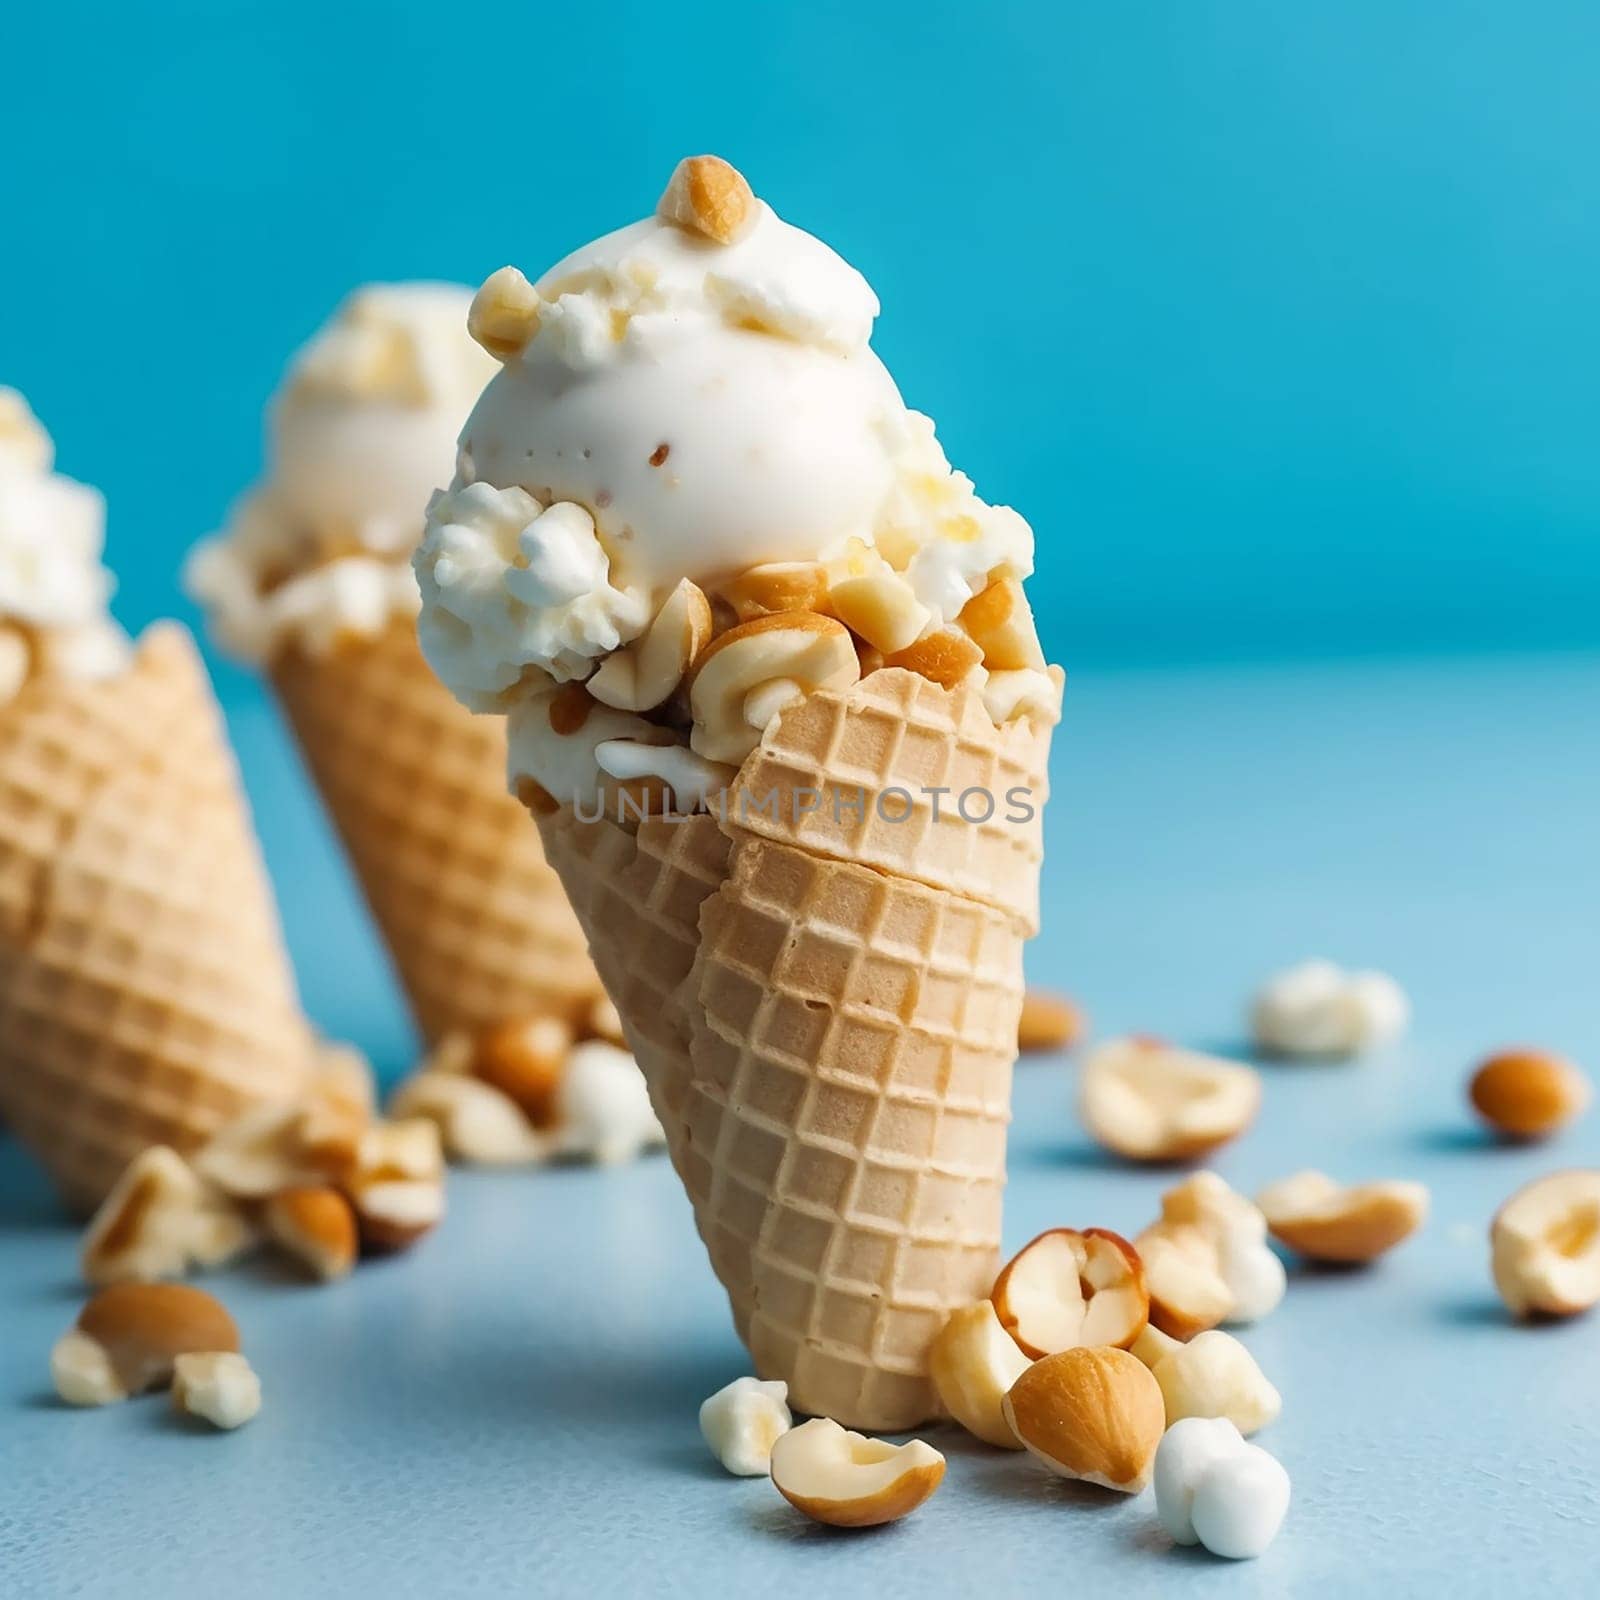 Vanilla ice cream cones with popcorn on a blue background